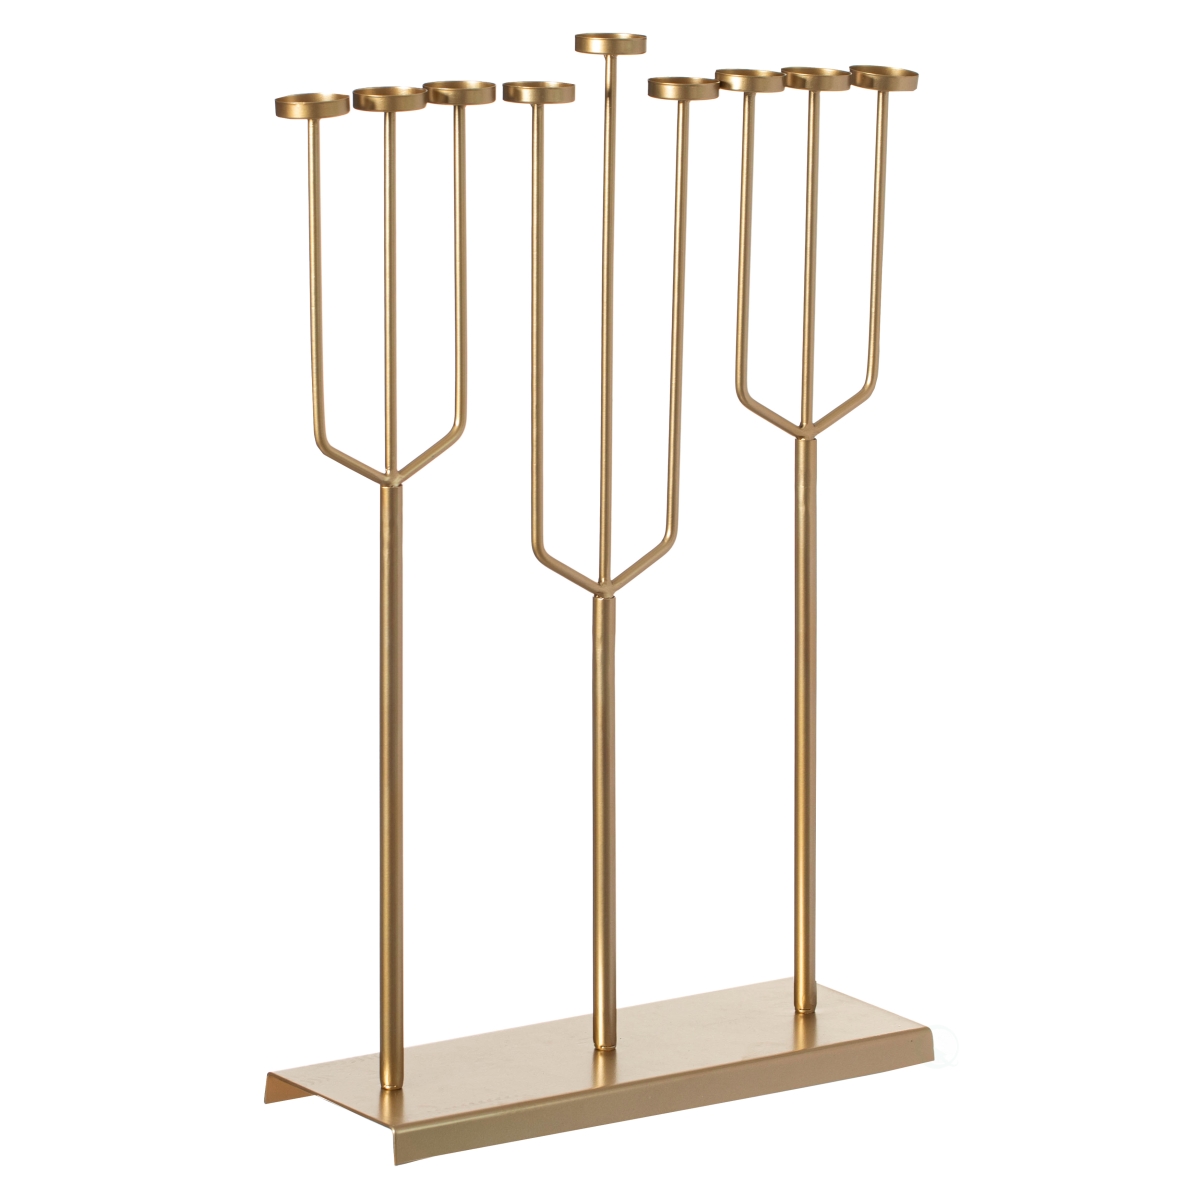 Picture of Vintiquewise QI004643.DG.L Modern Design Hanukkah Menorah Exceptional presentational piece&#44; 9 Branch Tea Light Candle Holders&#44; Gold